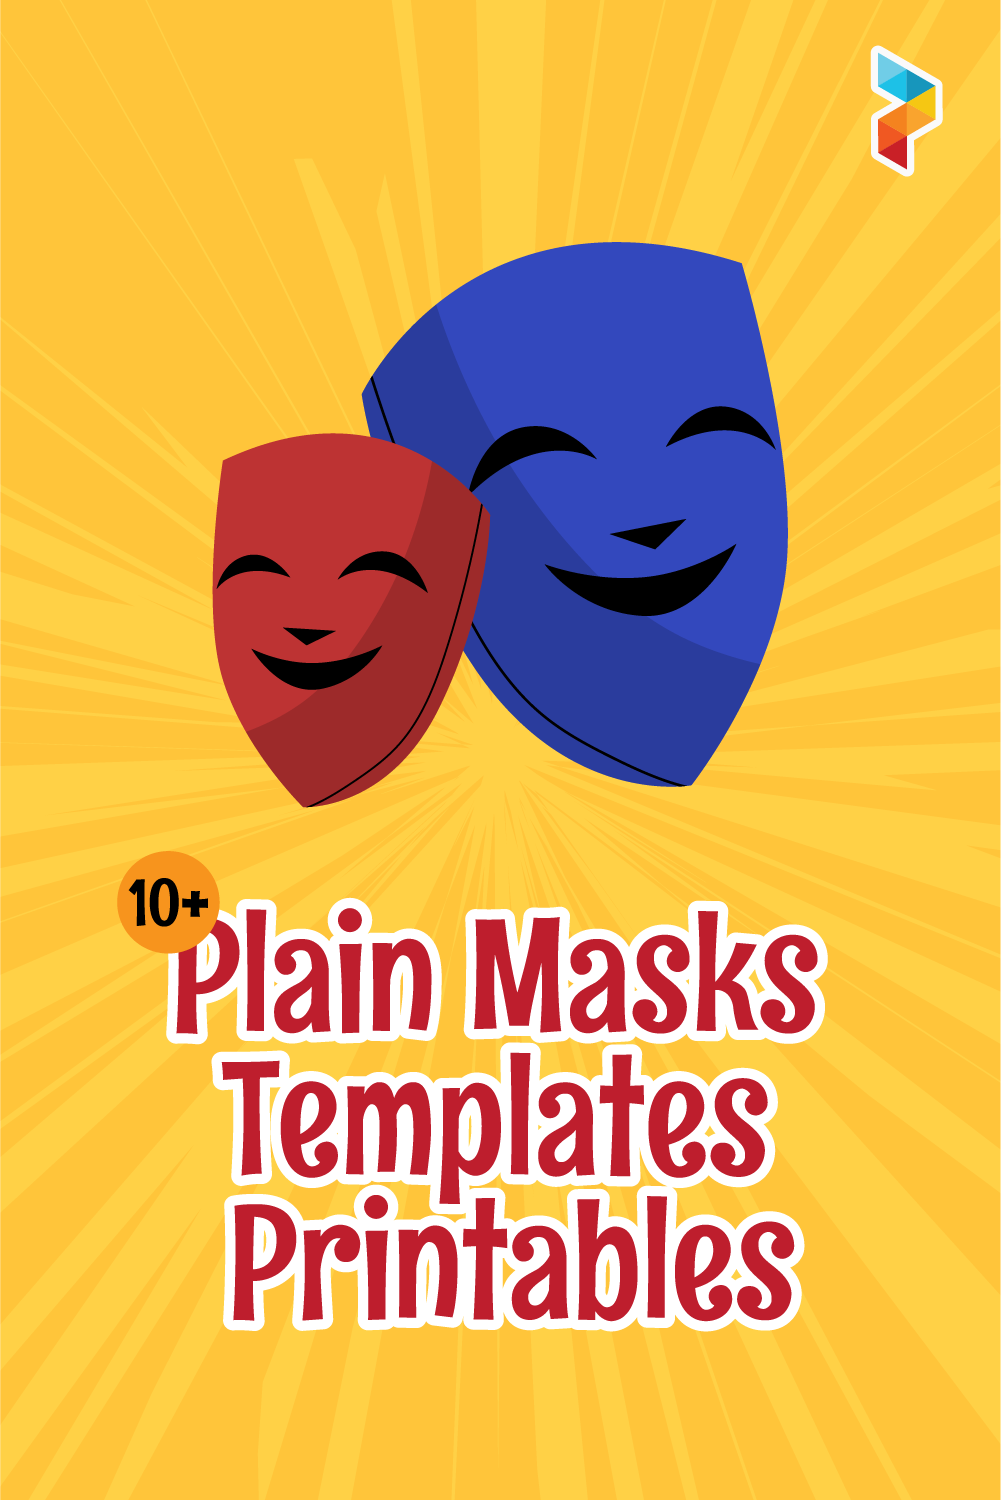 Plain Masks Templates Printables